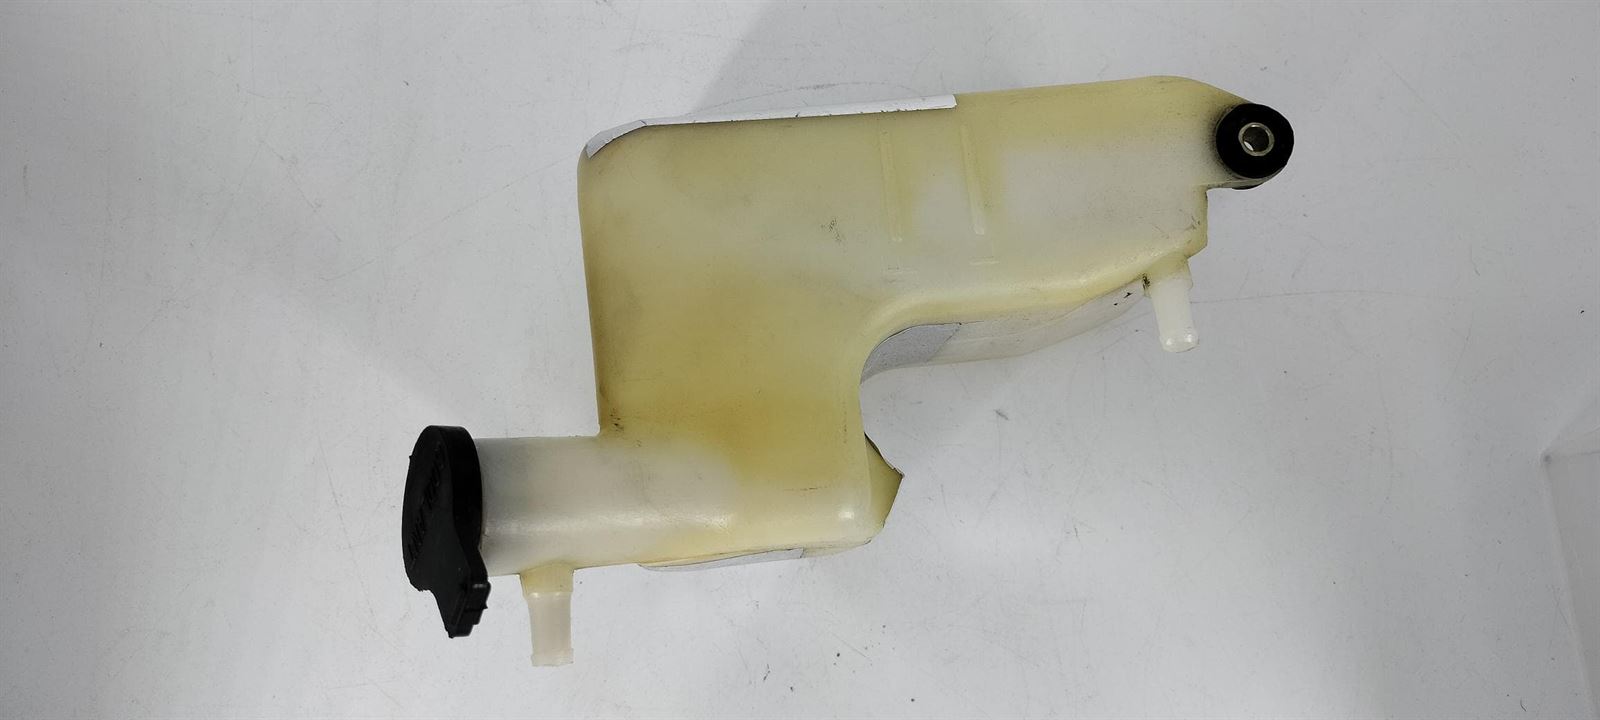 Depósito líquido refrigerante Hyosung GV 650 (Ocasion) - Imagen 3